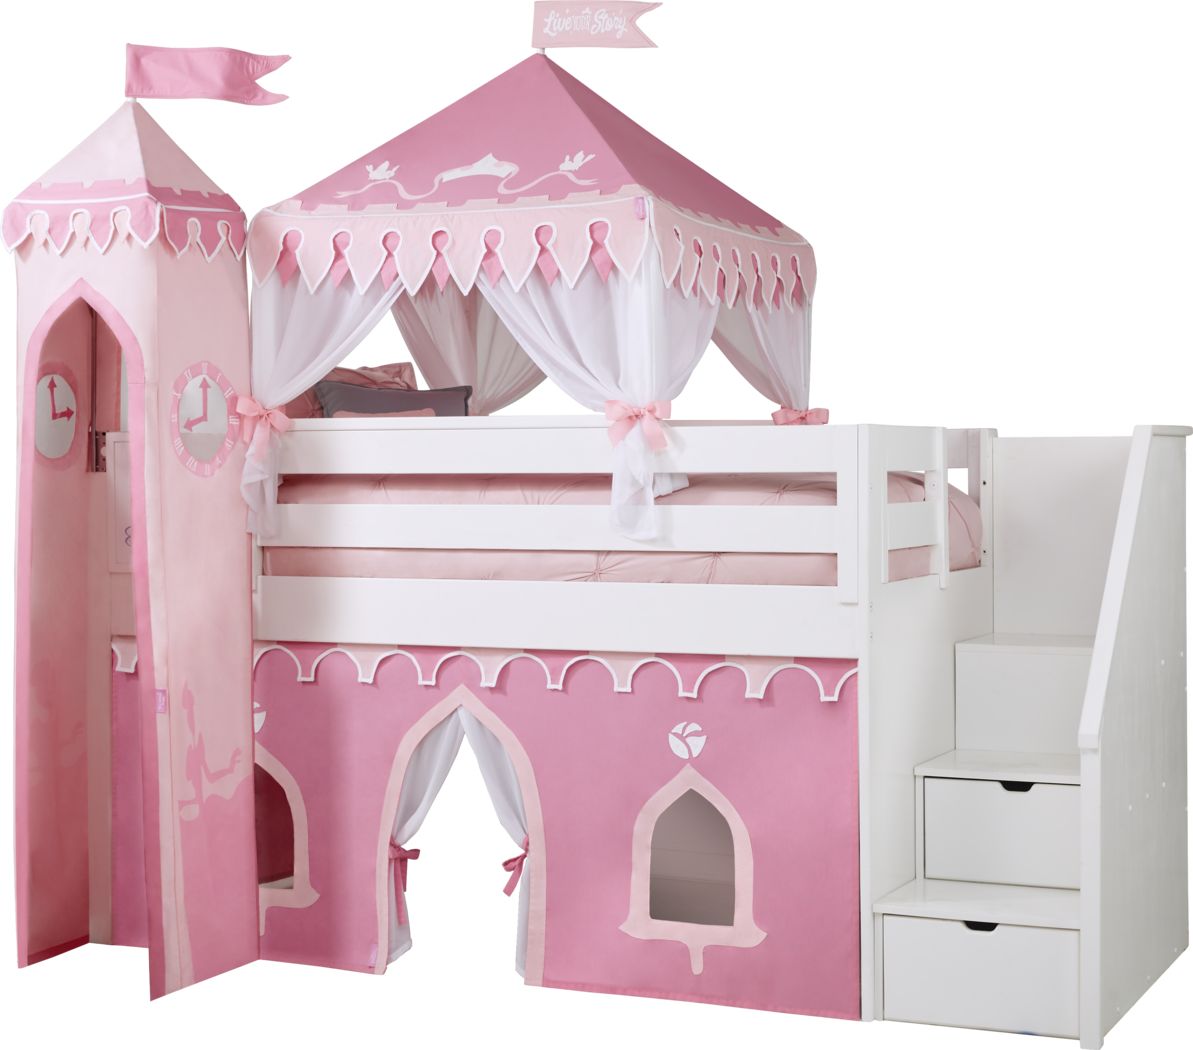 Disney Princess Fairytale White Step, White Princess Bunk Beds